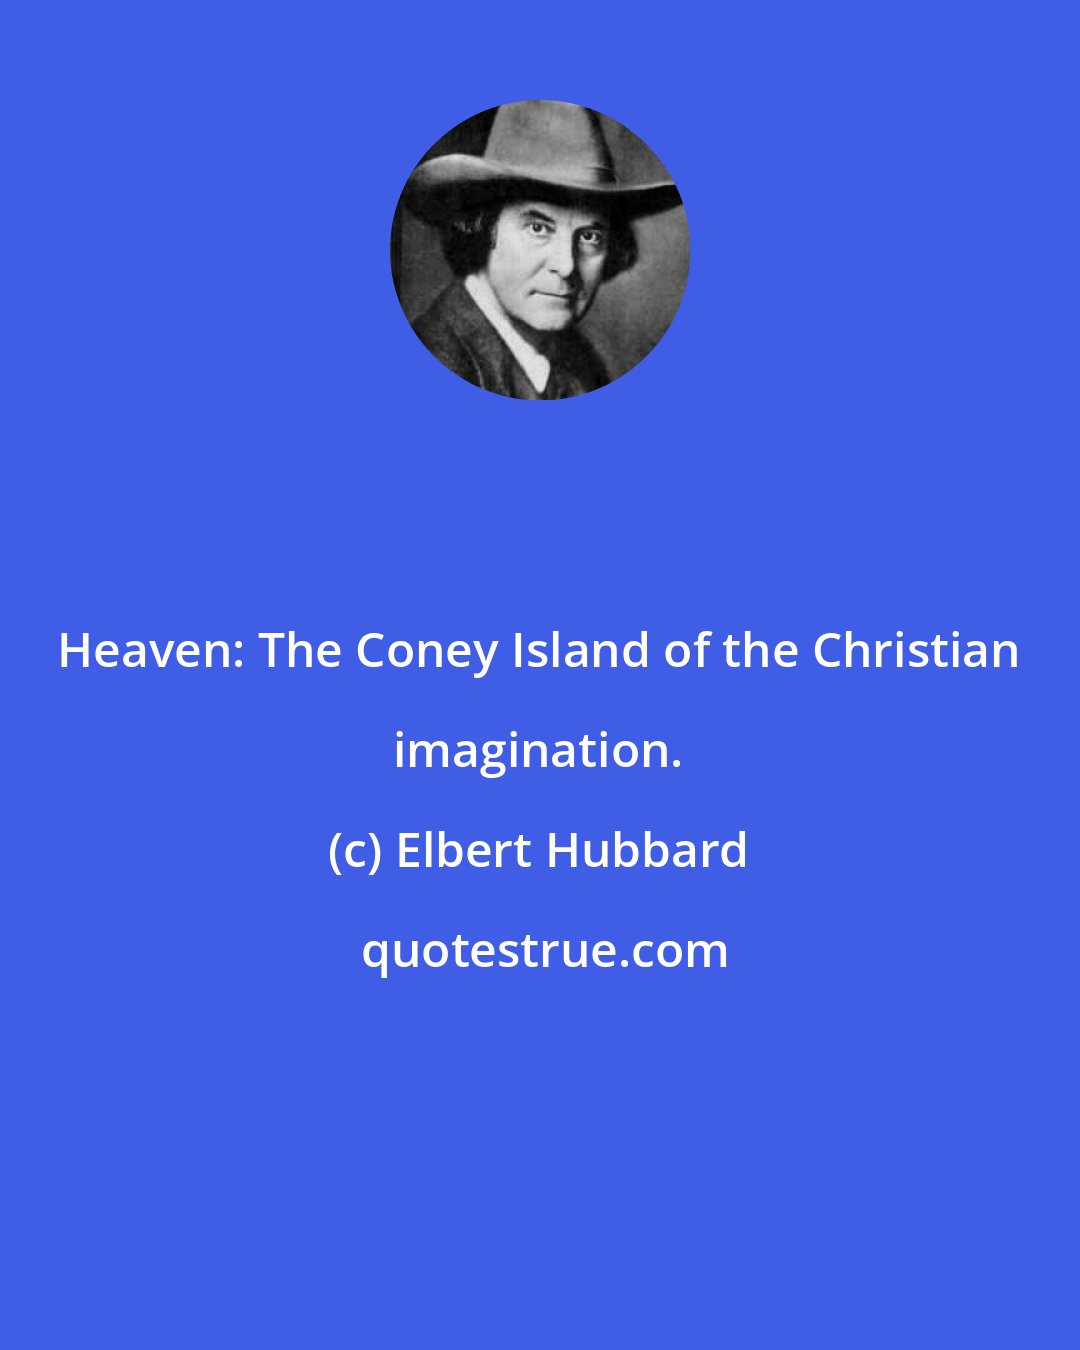 Elbert Hubbard: Heaven: The Coney Island of the Christian imagination.